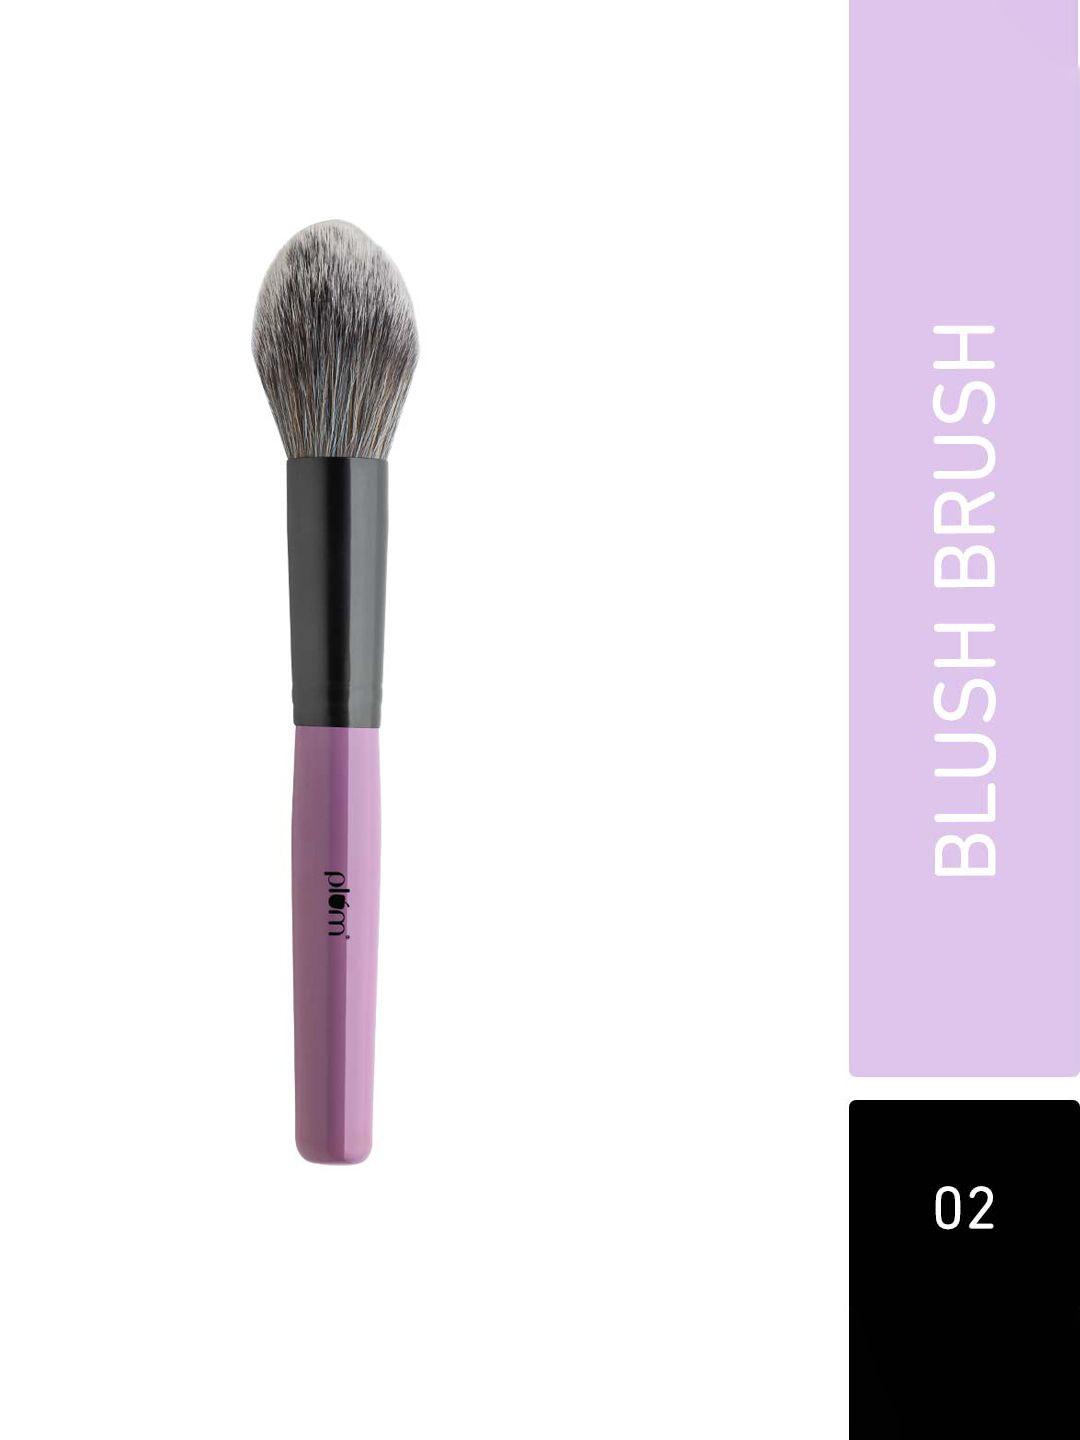 plum soft blend blush brush for flawless application - 02